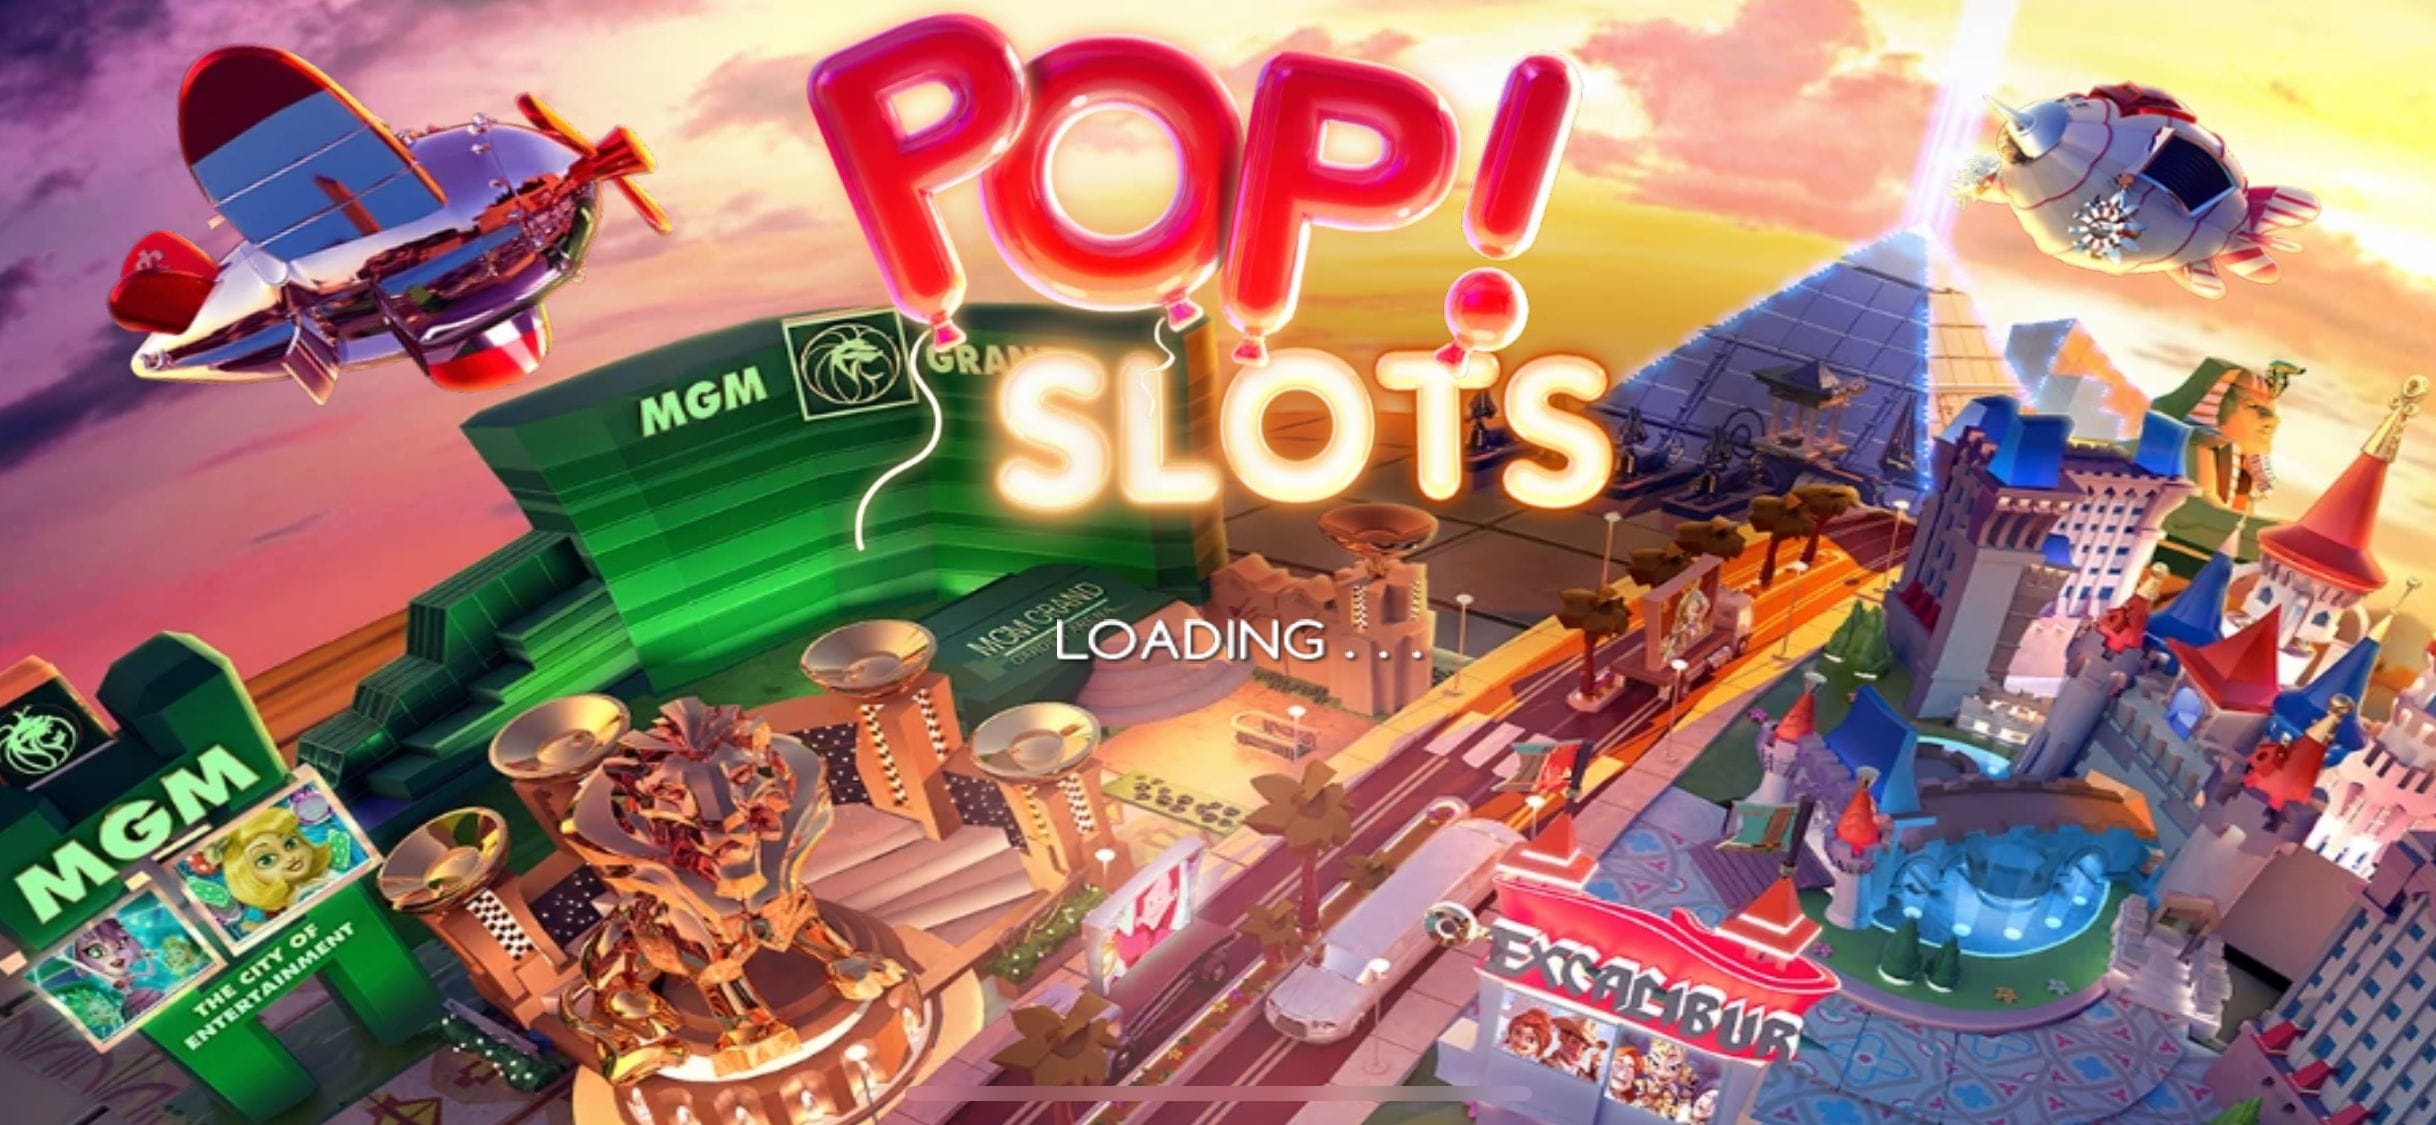 pop slots level up rewards